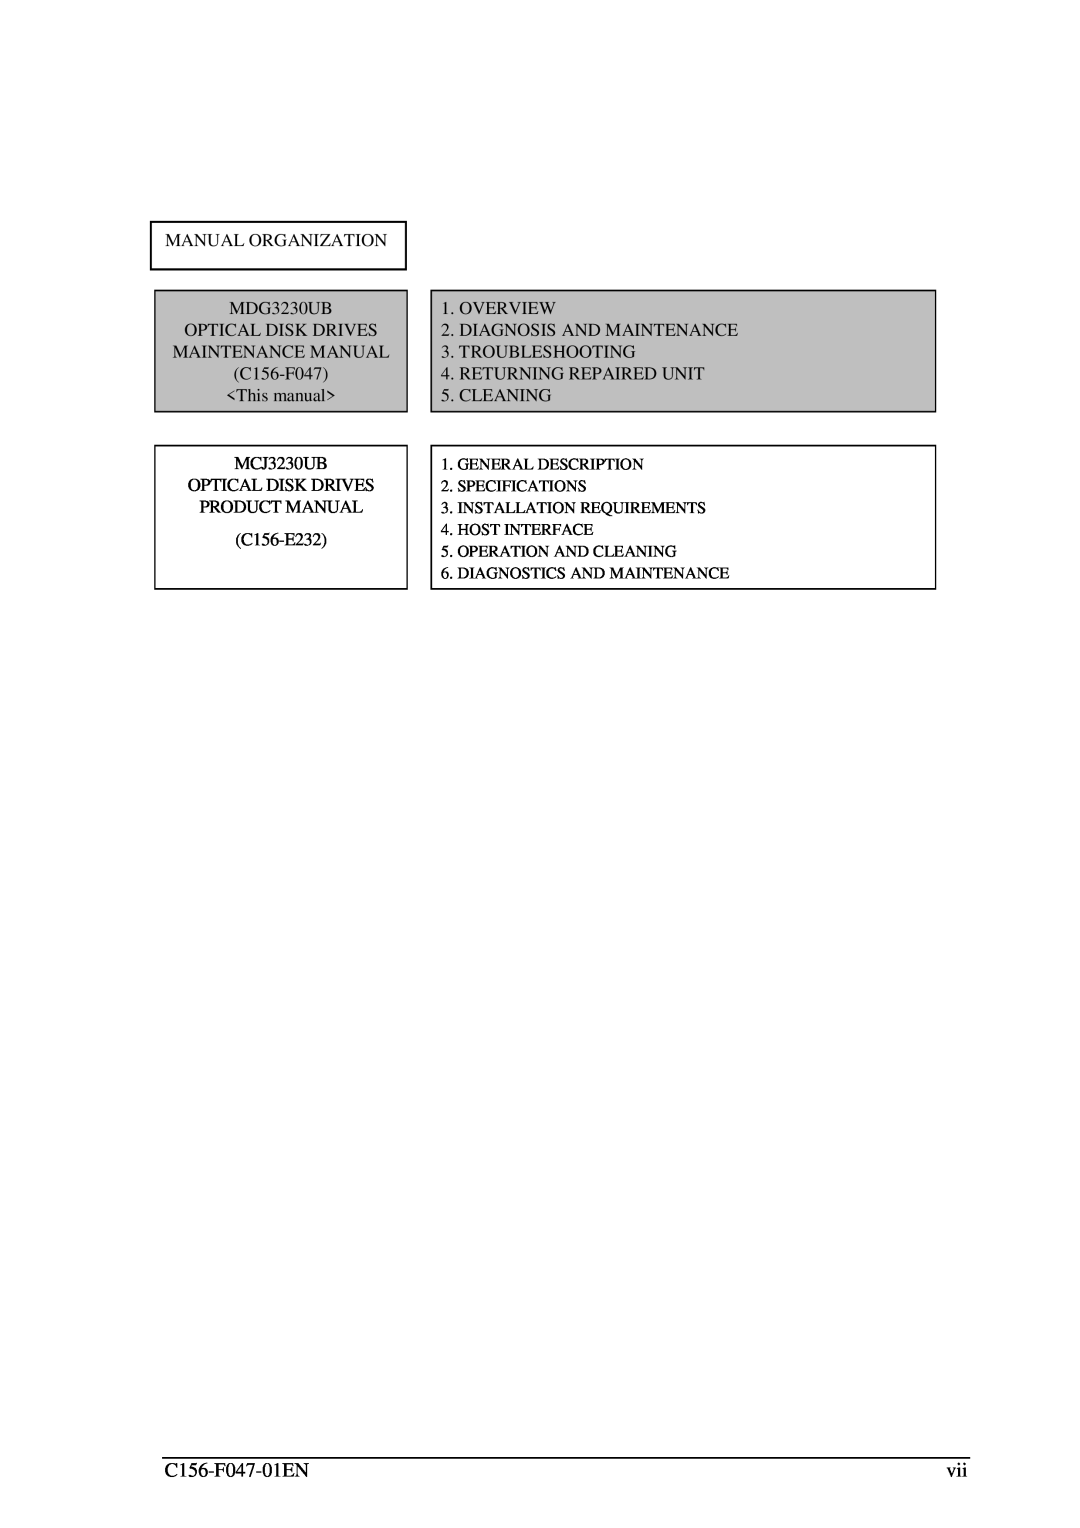 Fujitsu MANUAL ORGANIZATION MDG3230UB OPTICAL DISK DRIVES MAINTENANCE MANUAL, C156-E232, Diagnostics And Maintenance 